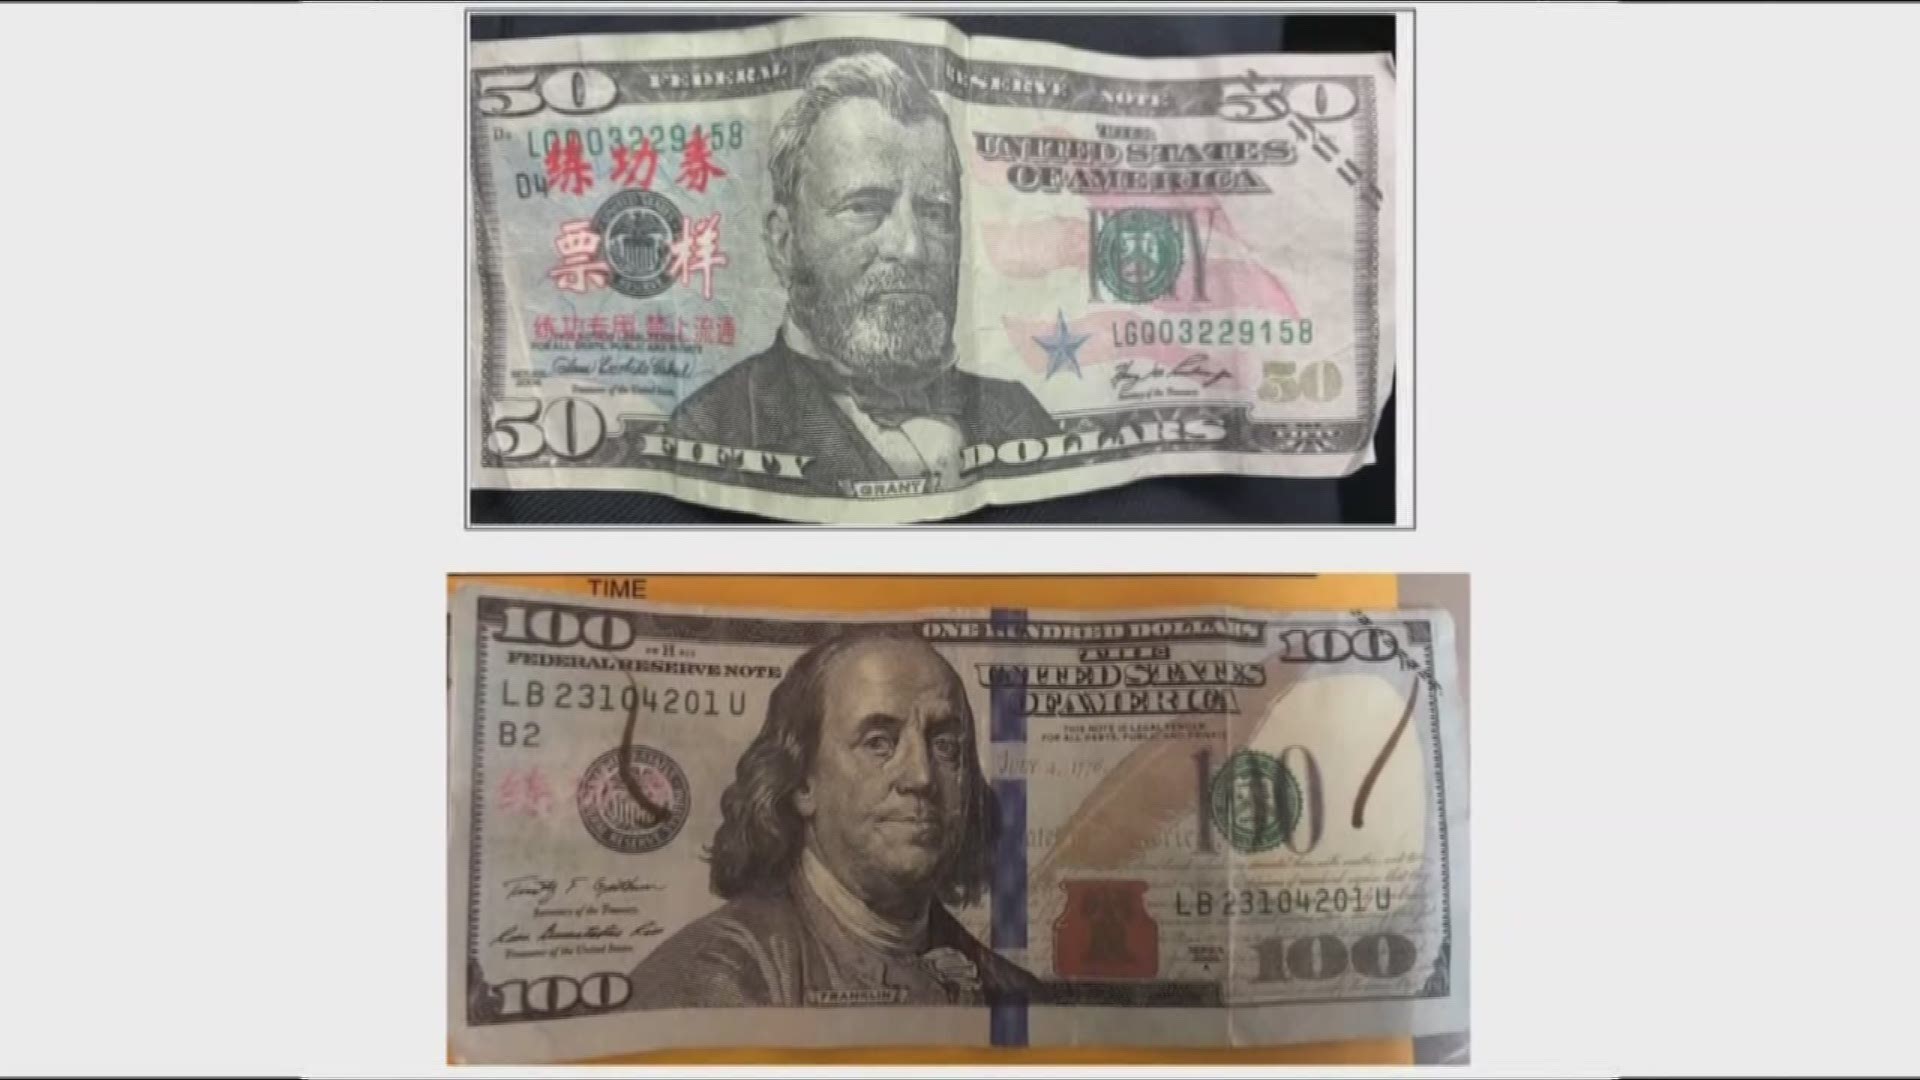 Counterfeit money circulating in Bangor